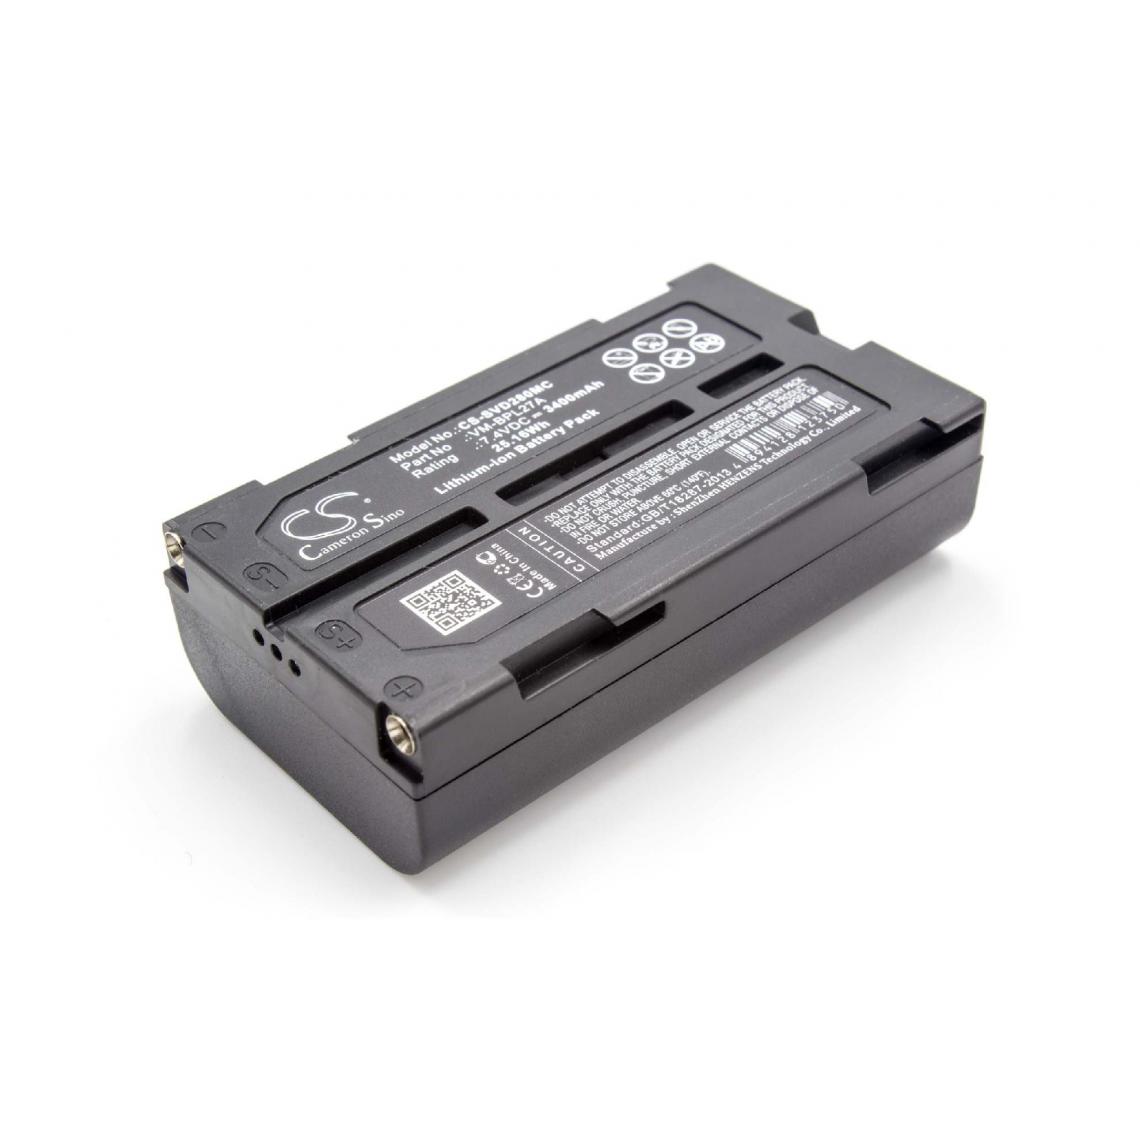 Vhbw - vhbw Batterie compatible avec Sokkia SET330RK3, SET3 30RK3, SET 330RK3, SET350RX, SET500, SET 500 outil de mesure (3400mAh, 7,4V, Li-ion) - Piles rechargeables